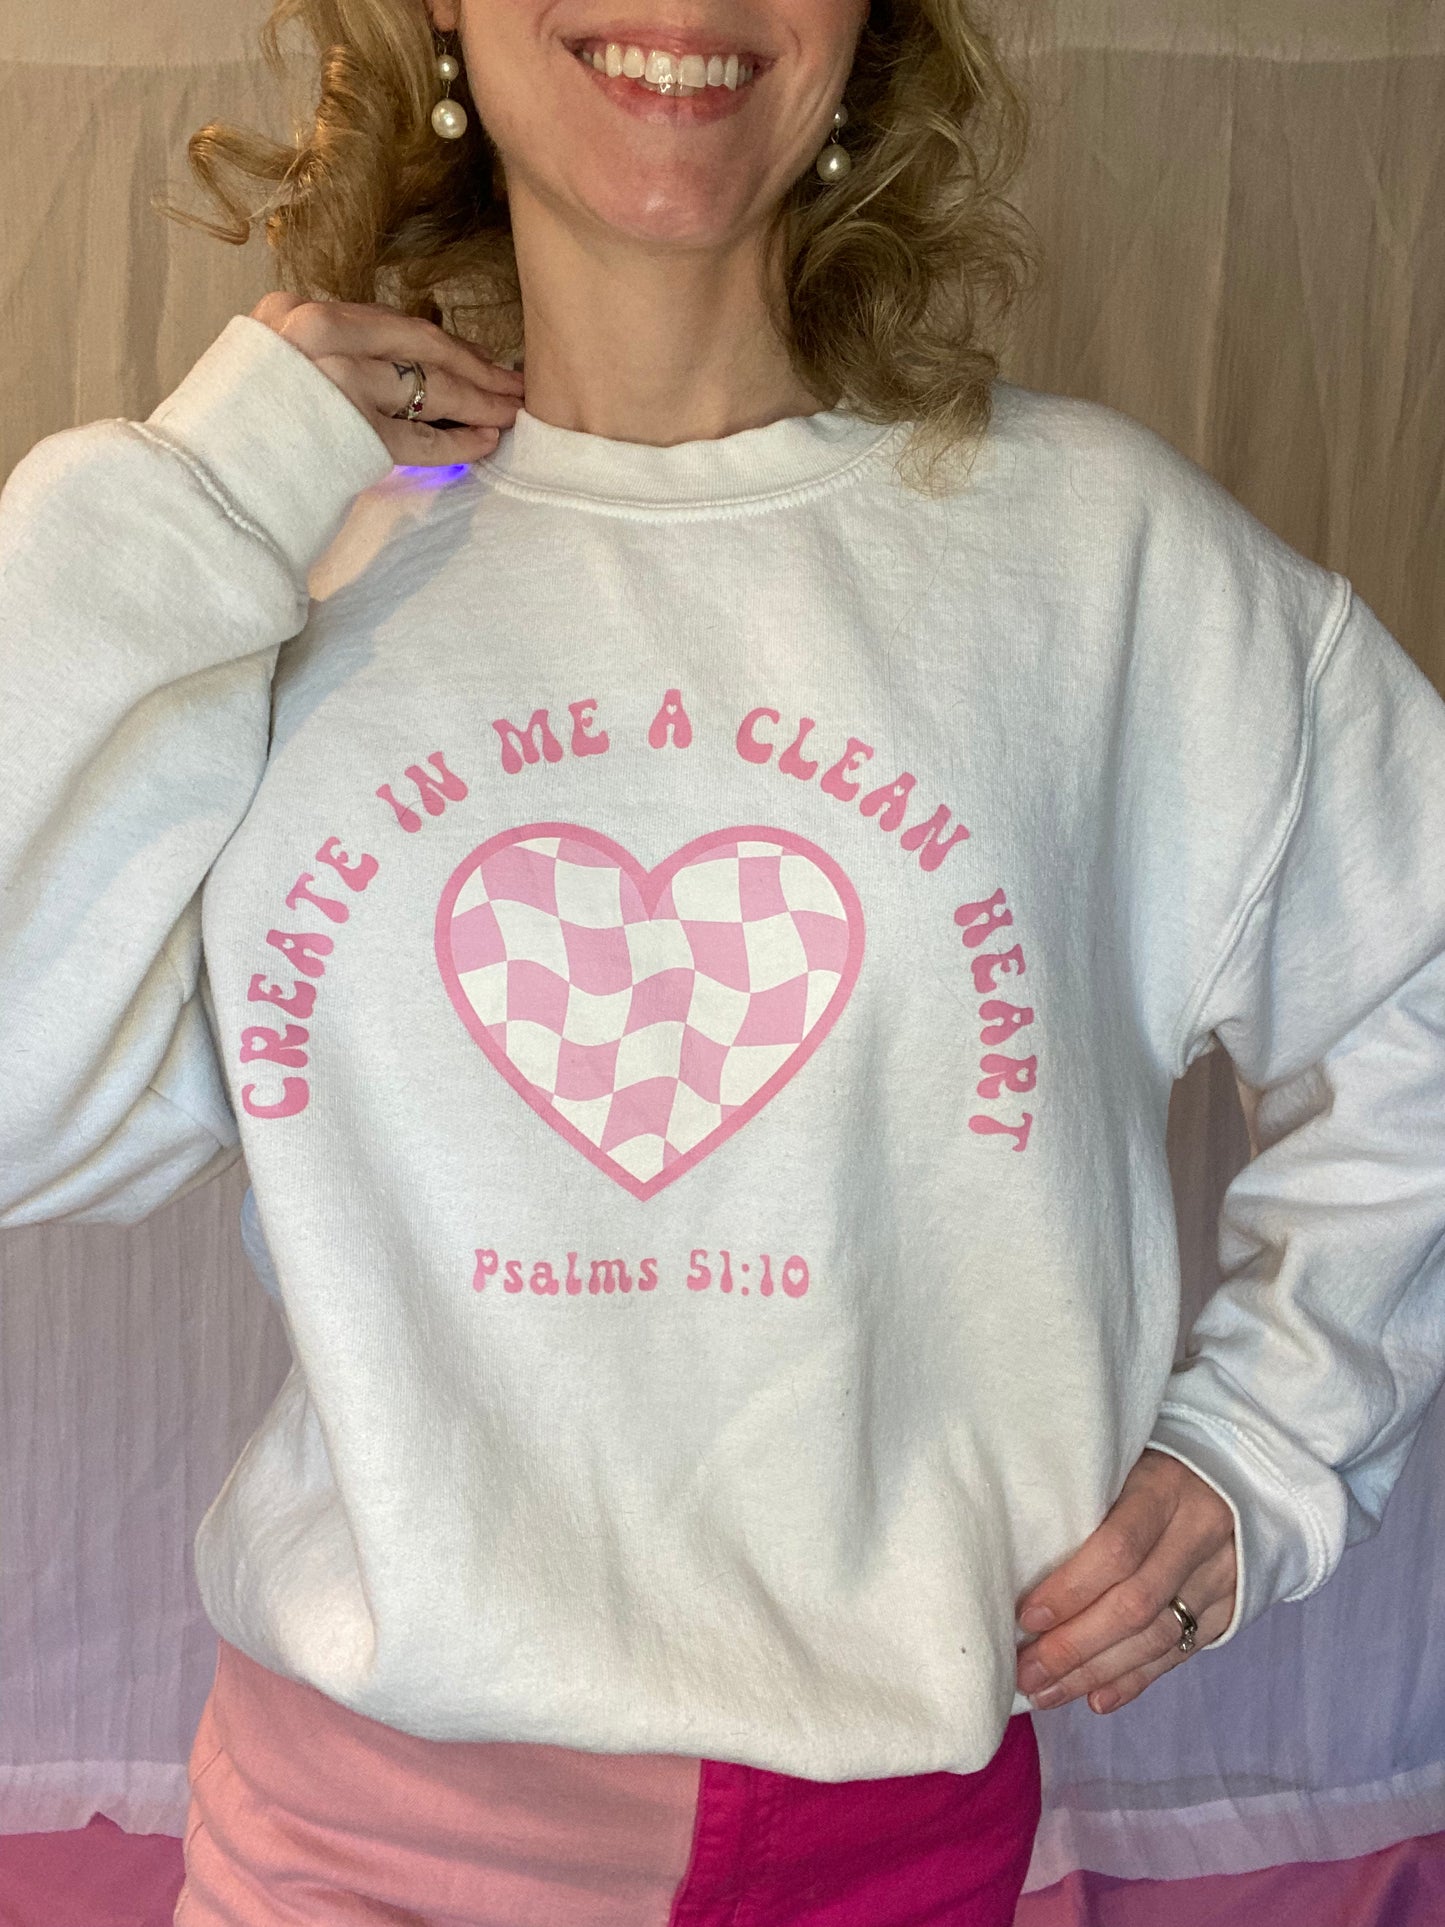 Create in me a clean heart - Crewneck Sweatshirt